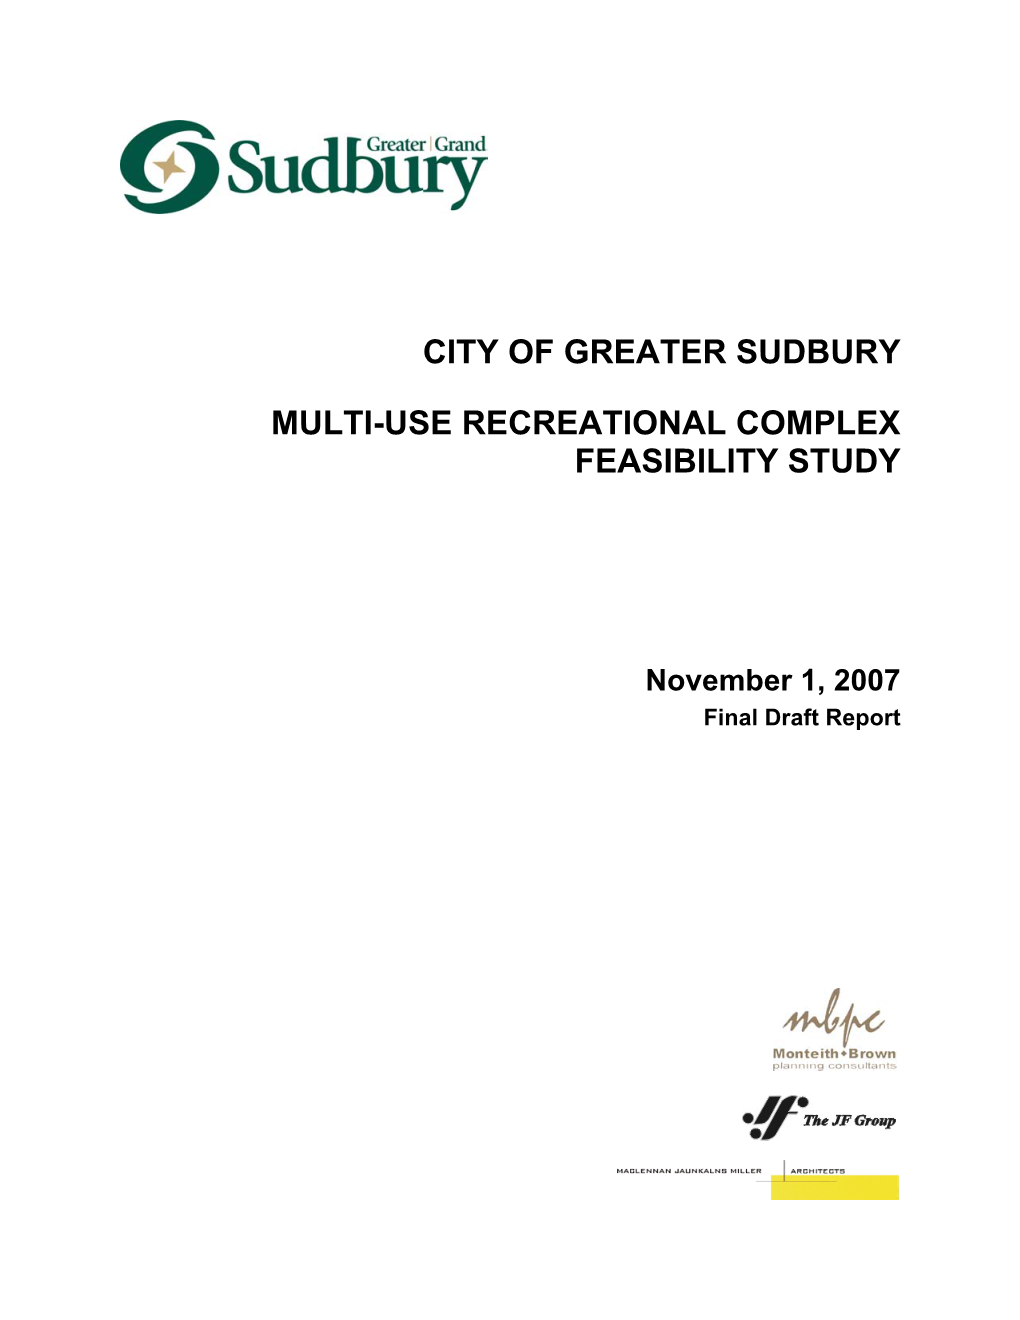 City of Greater Sudbury Multi-Use Recreational Complex